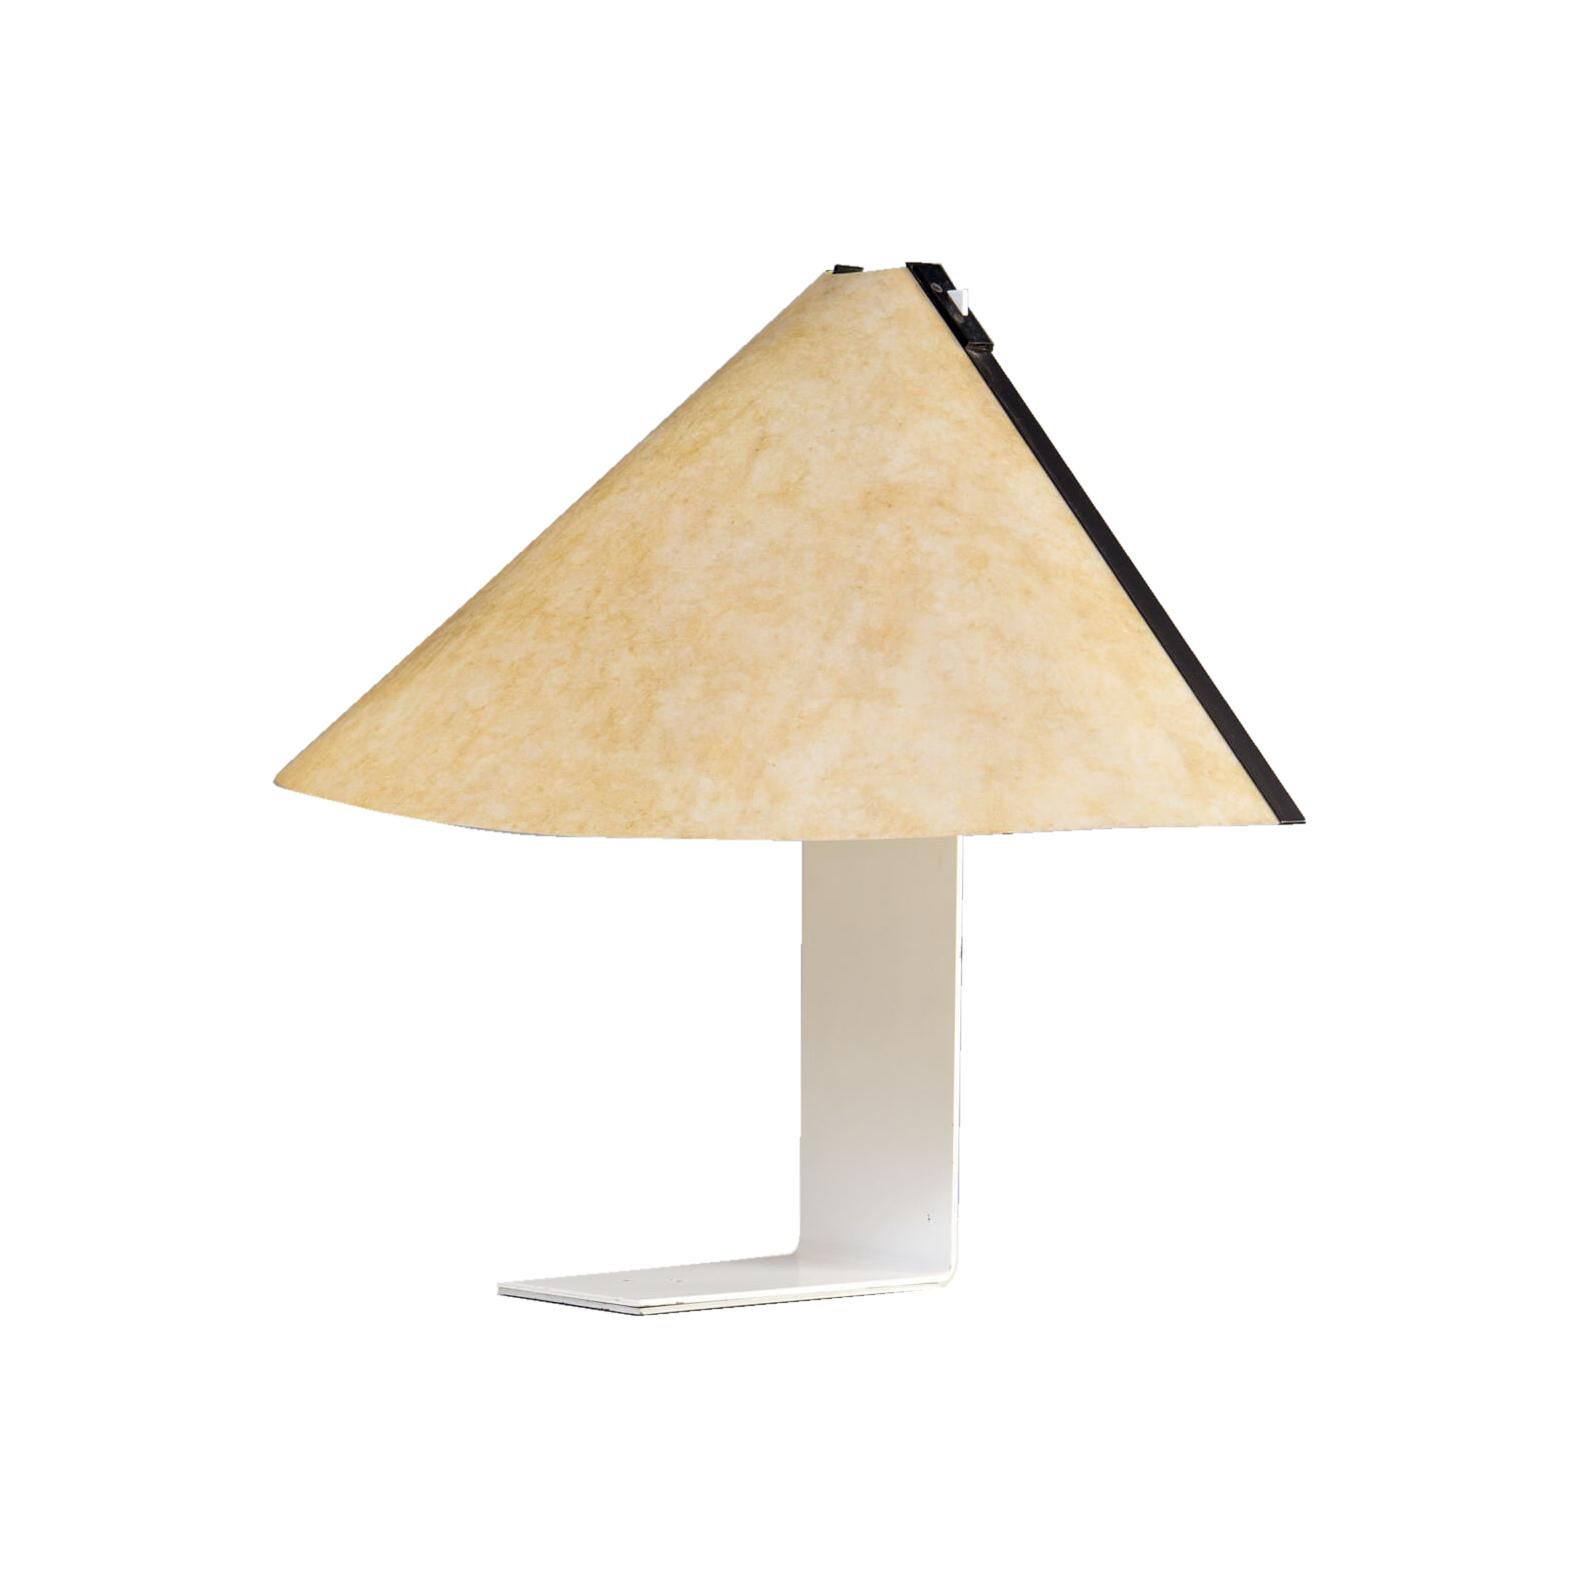 1970s Vico Magistretti ‘Porsenna’ Table/Wall Lamp for Artemide For Sale